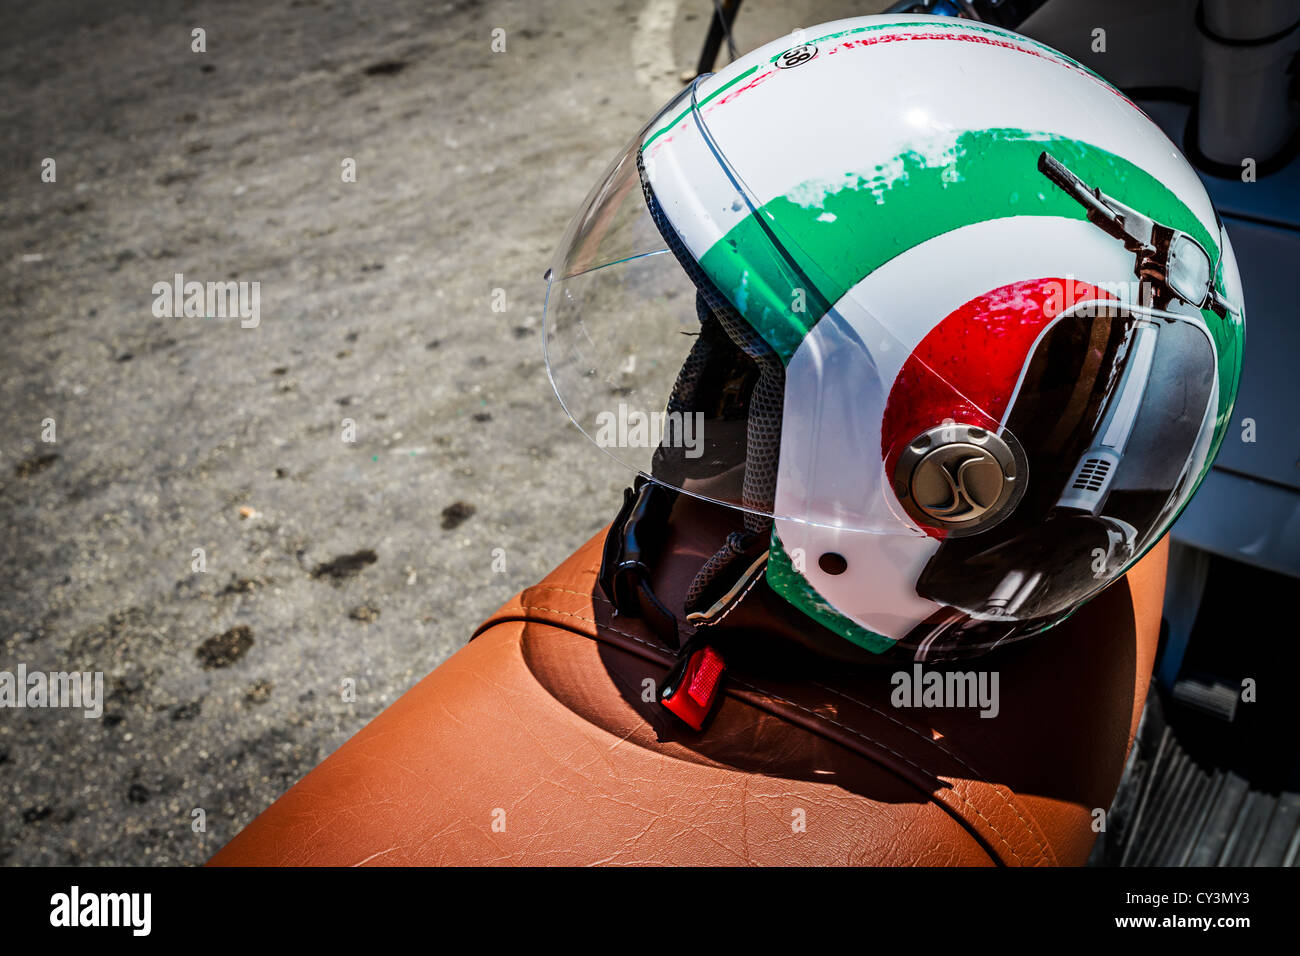 Motorrad Helm mit italienischen Farben, Sizilien, Italien Stockfotografie -  Alamy